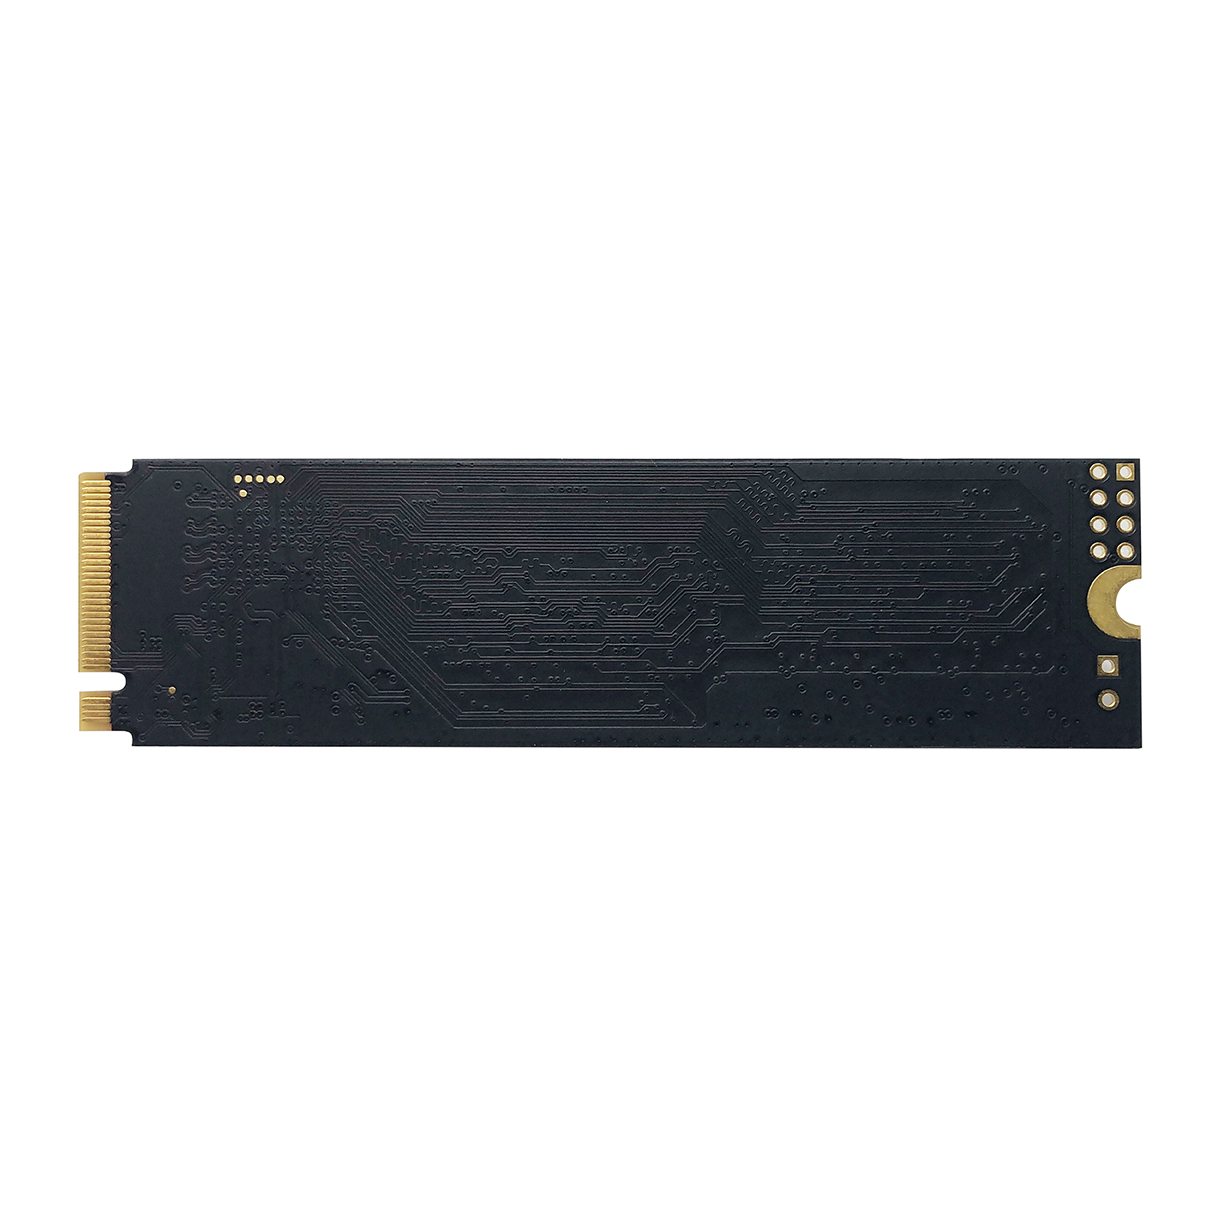 Жесткий диск SSD 240Gb Patriot P310P240GM28